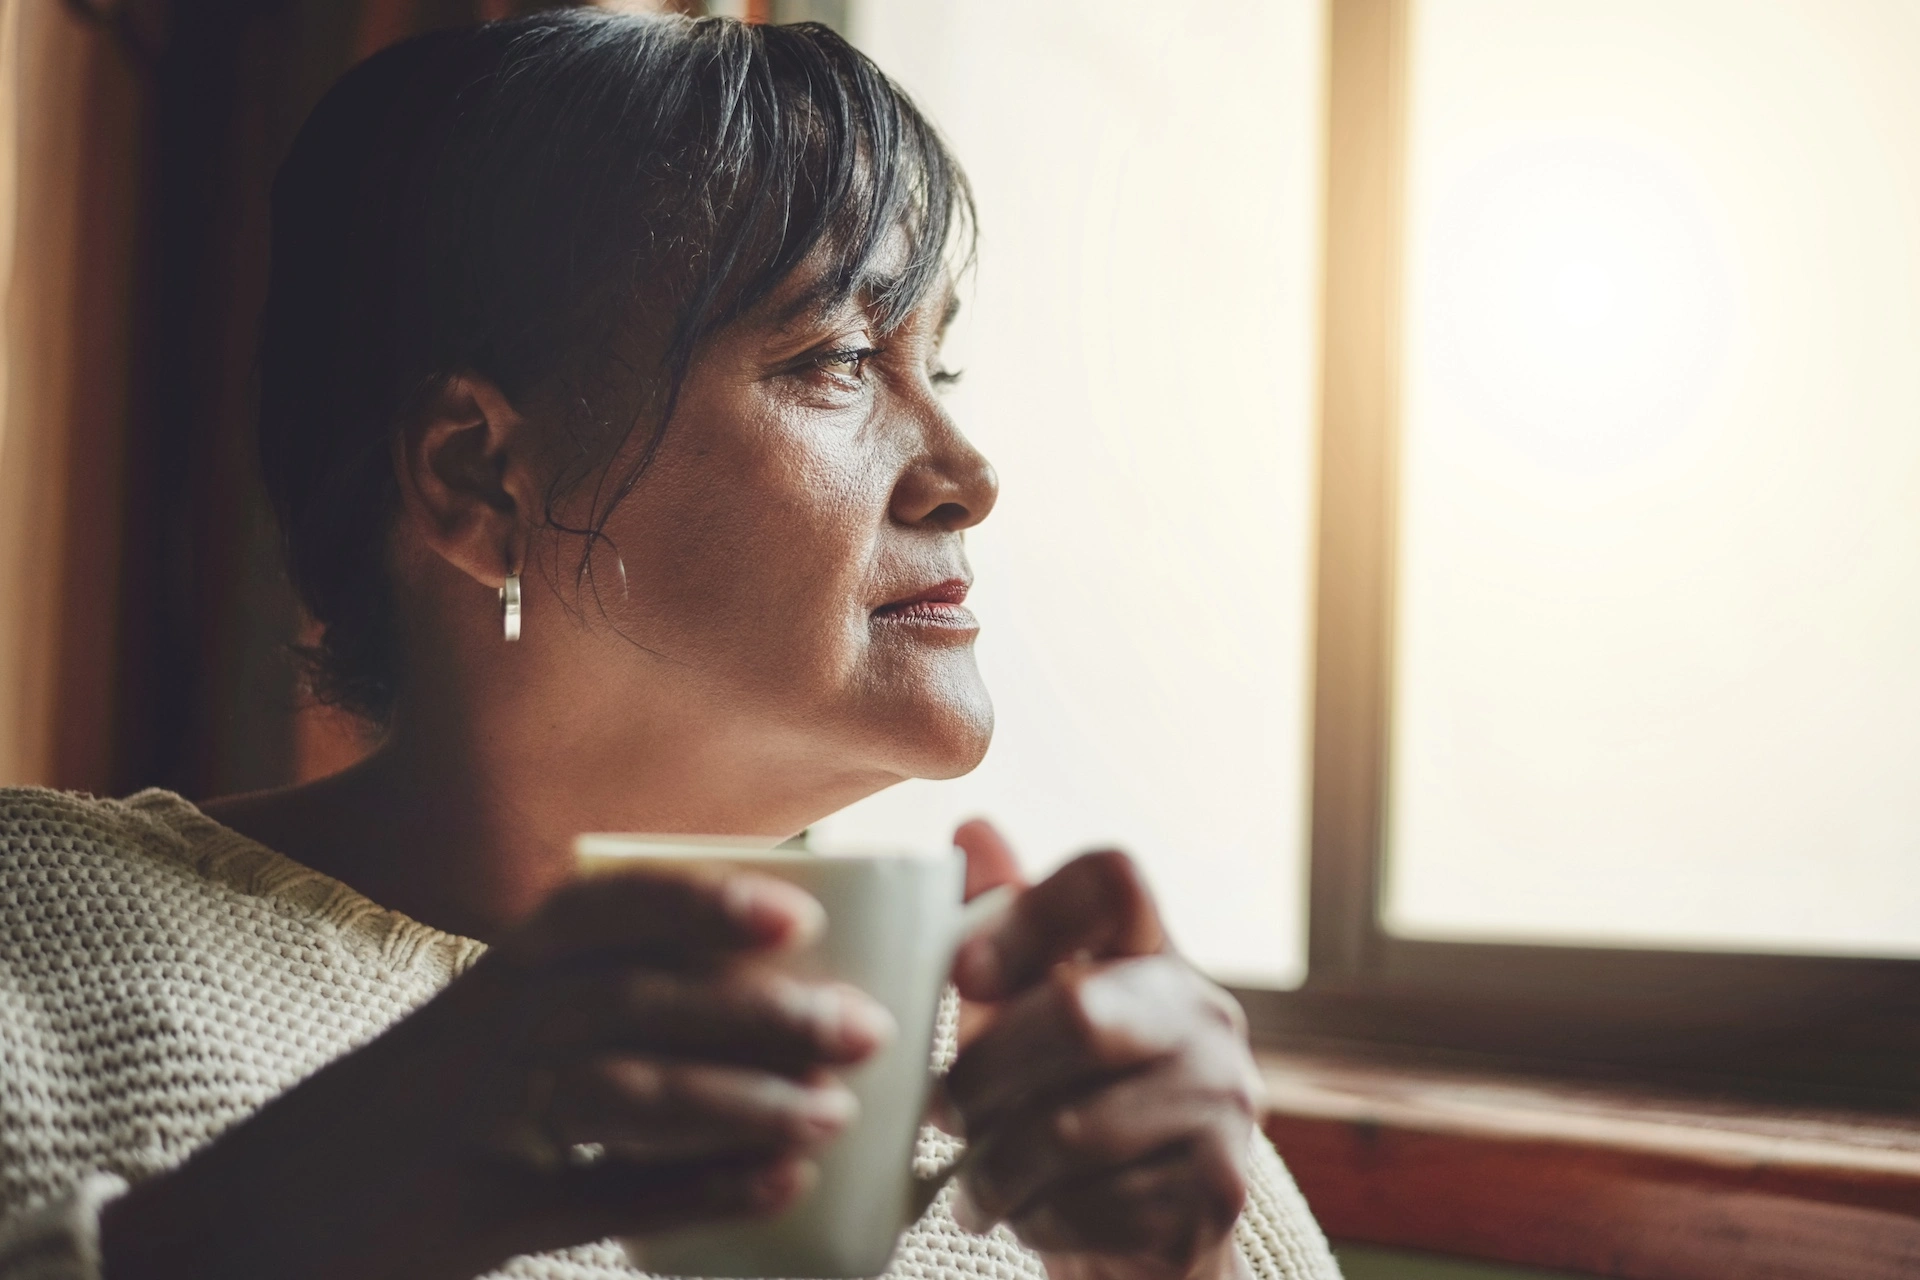 Woman with dark hair holding coffee mug looking out window